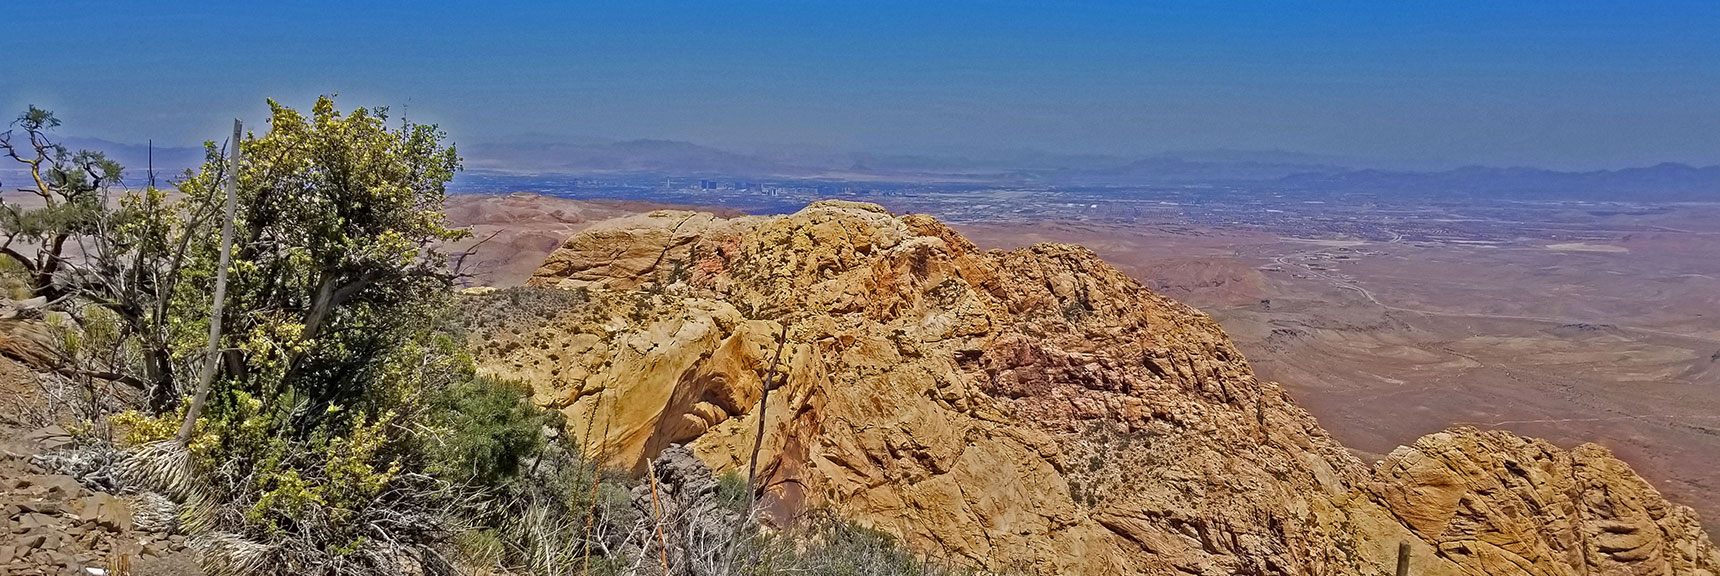 Looking Down from Ridgeline to Peak #5 - Hidden Peak - Monument Peak in Background | Rainbow Mountains Upper Crest Ridge, Nevada